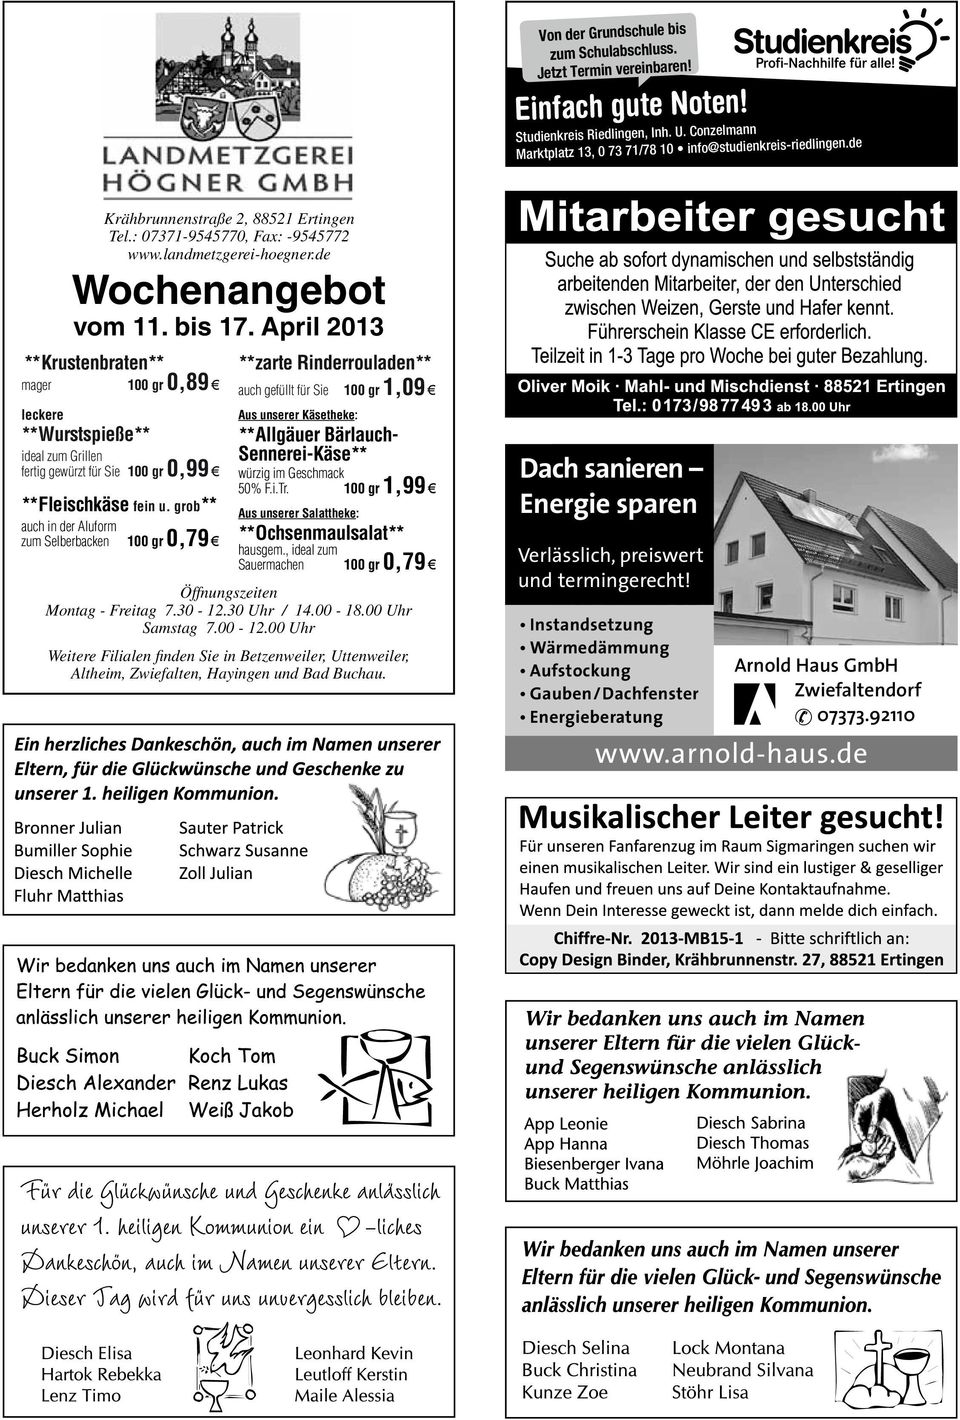 landmetzgerei-hoegner.de 0 73 74 / 9 20 50-0 www.landmetzgerei-hoegner.de Angebot vom 16. 22. Februar 2012 Wochenangebot vom 11. bis 17.